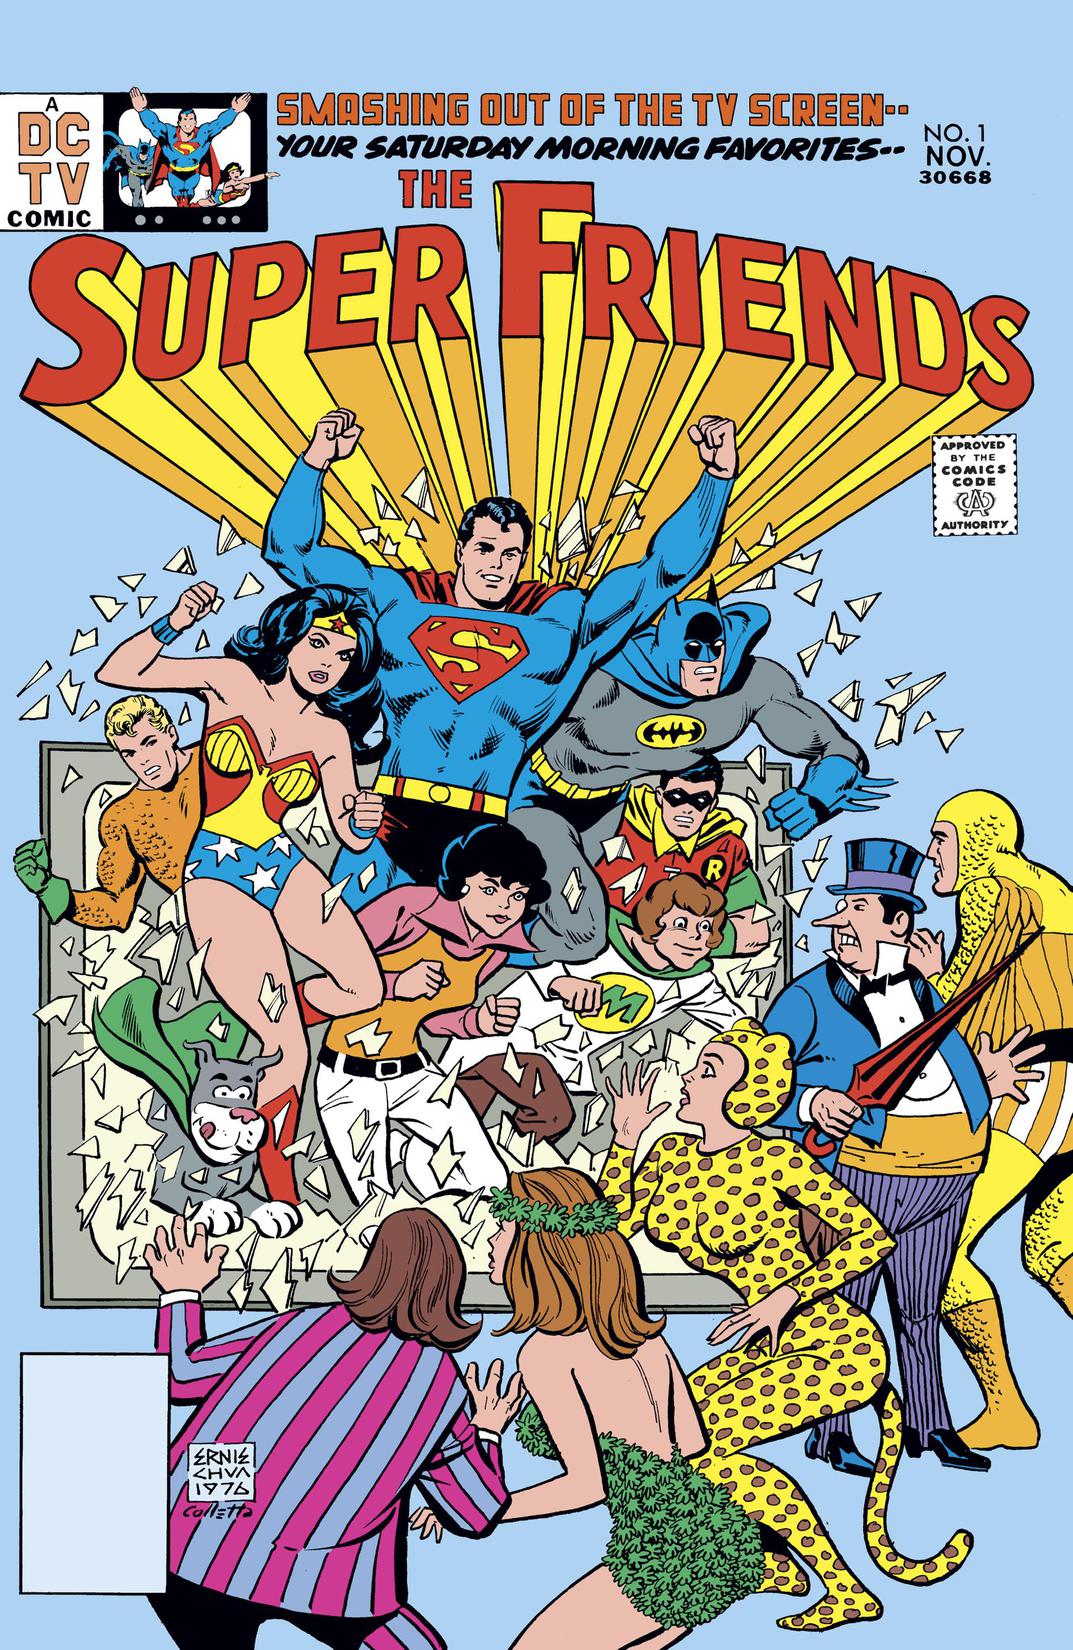 Super Friends (1976-) #1 preview images